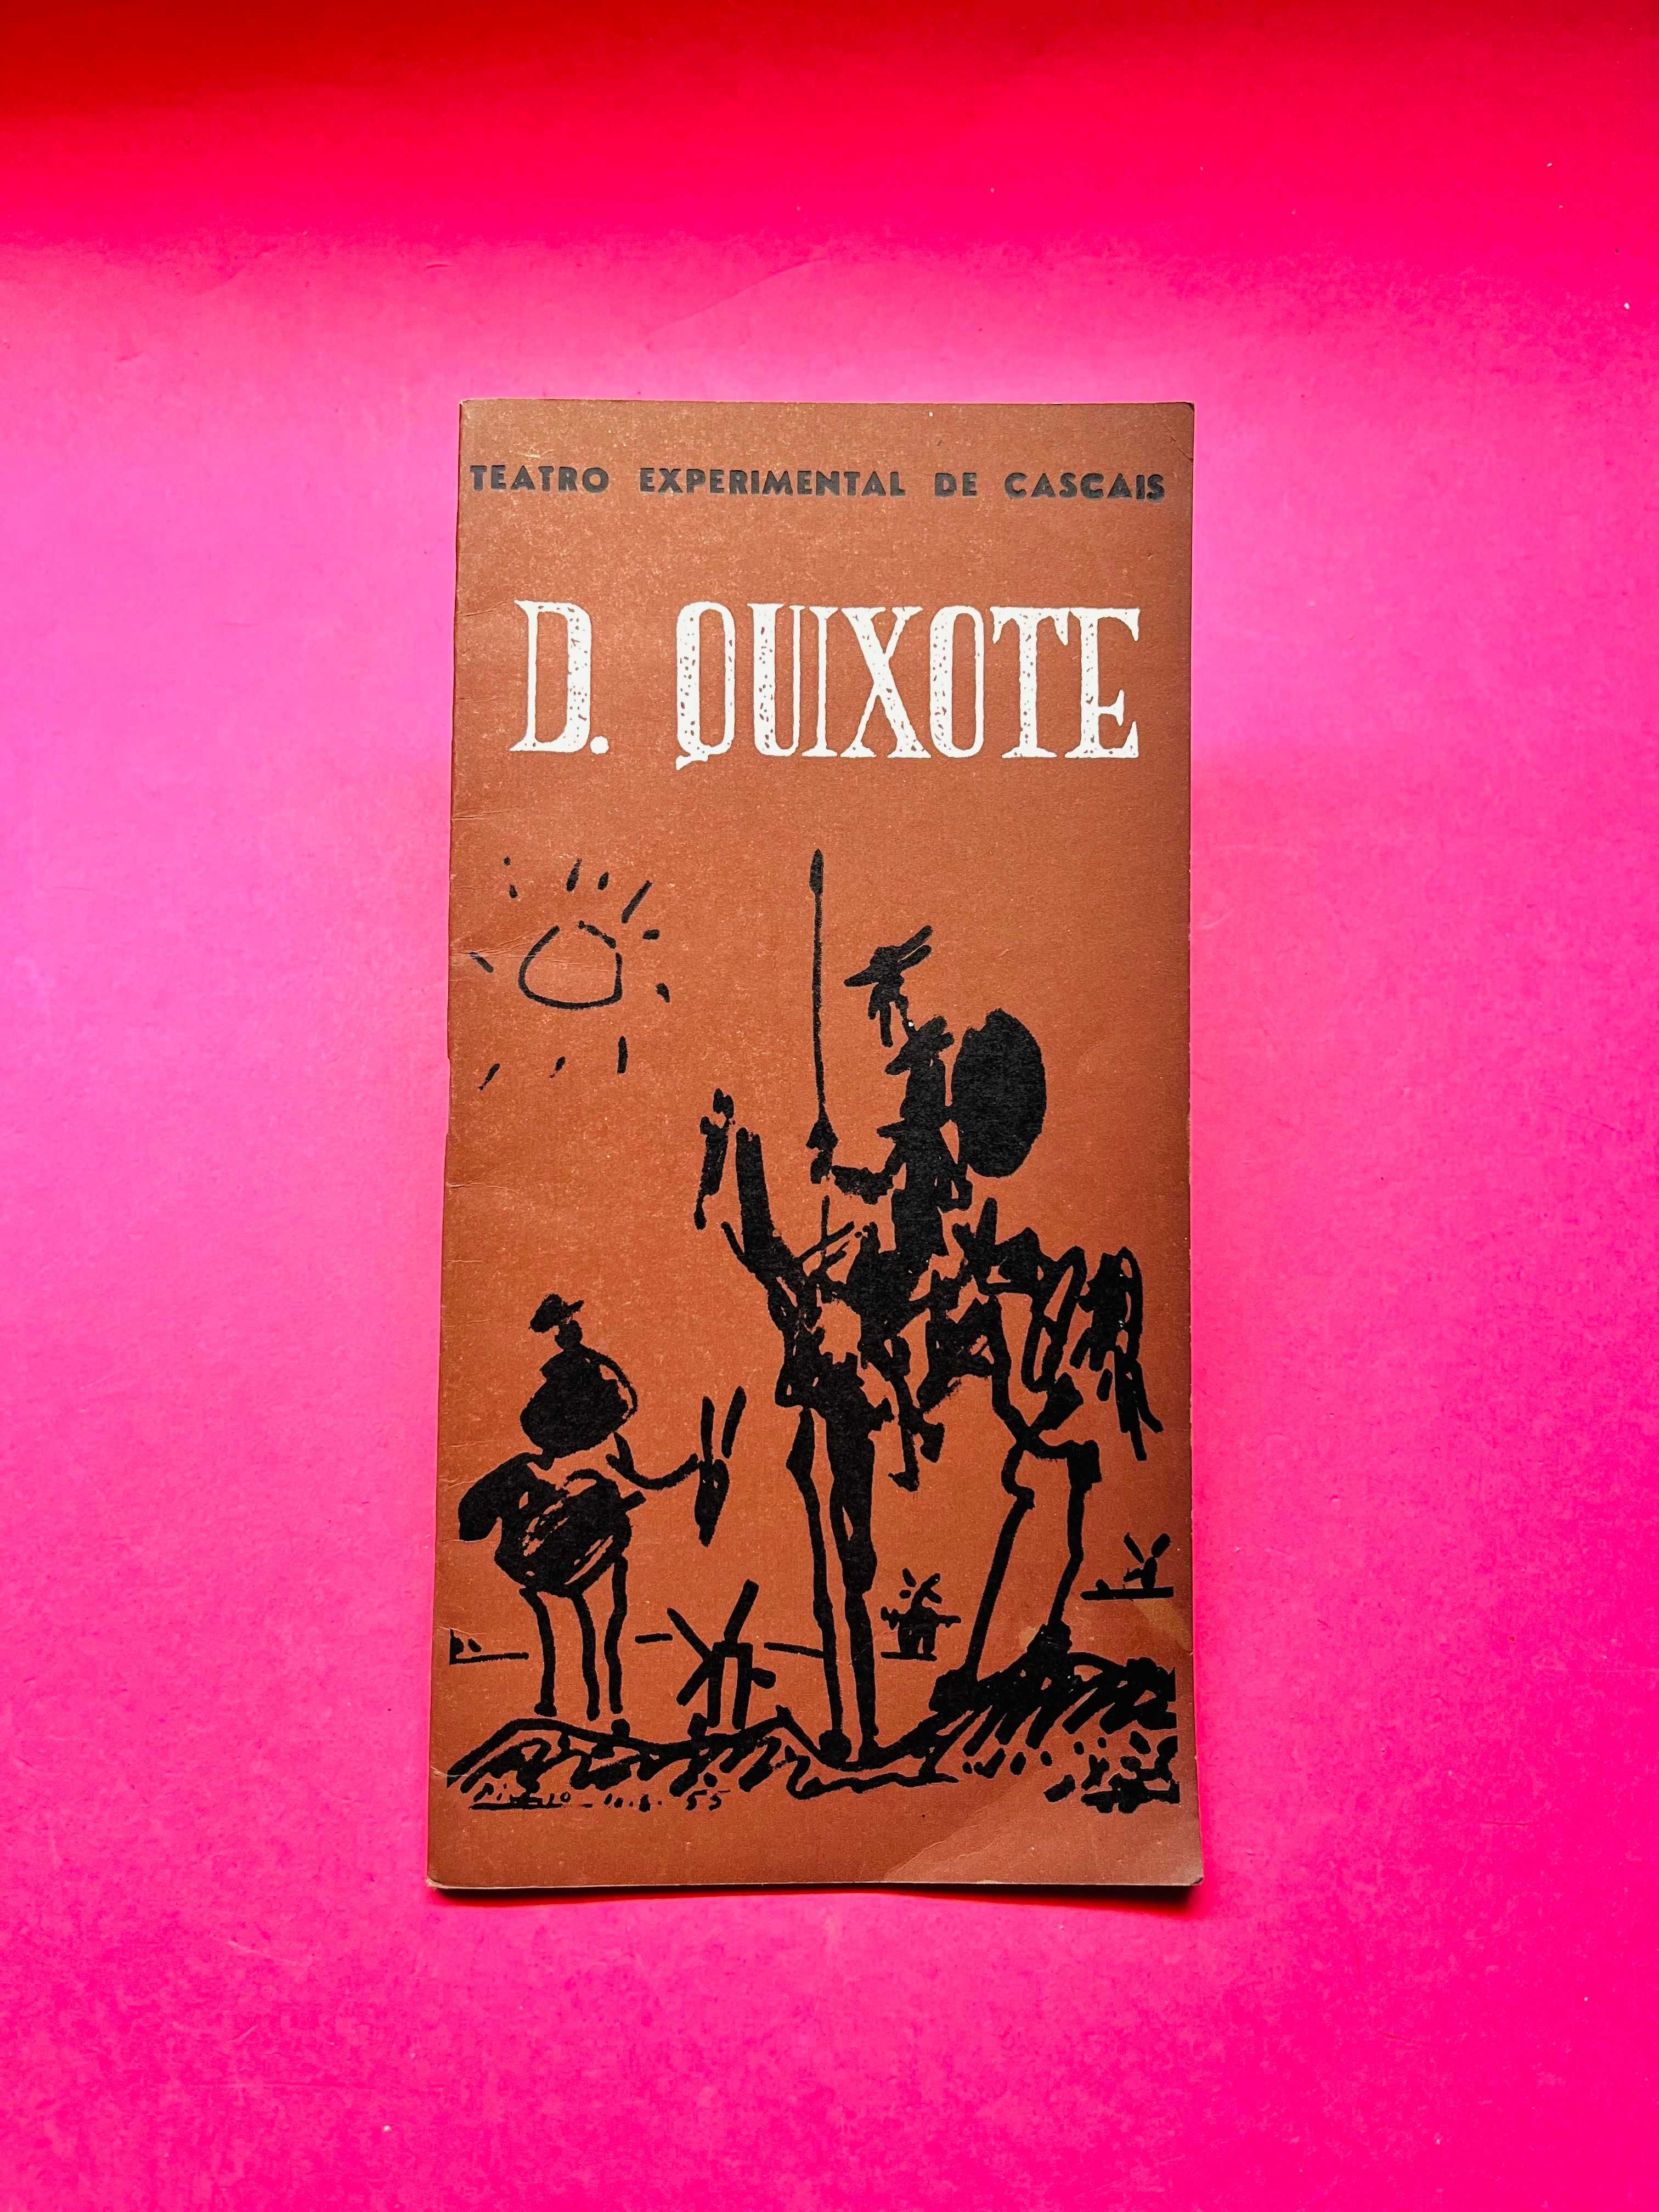 D. Quixote - Teatro Experimental de Cascais